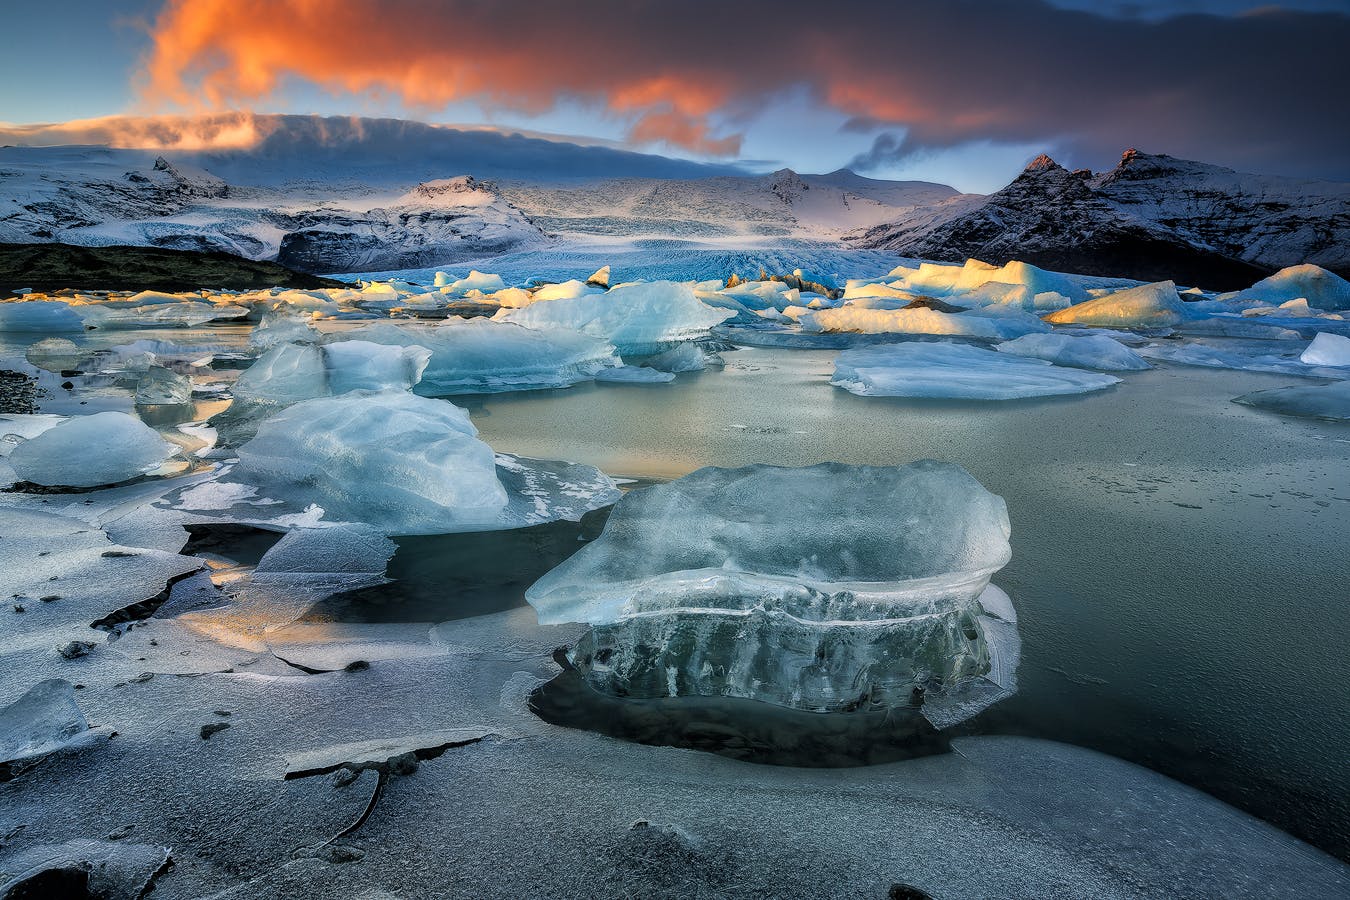 This 13 Day Self Drive Tour on Budget takes you to Jökulsárlón glacier lagoon, Iceland's crown jewel.